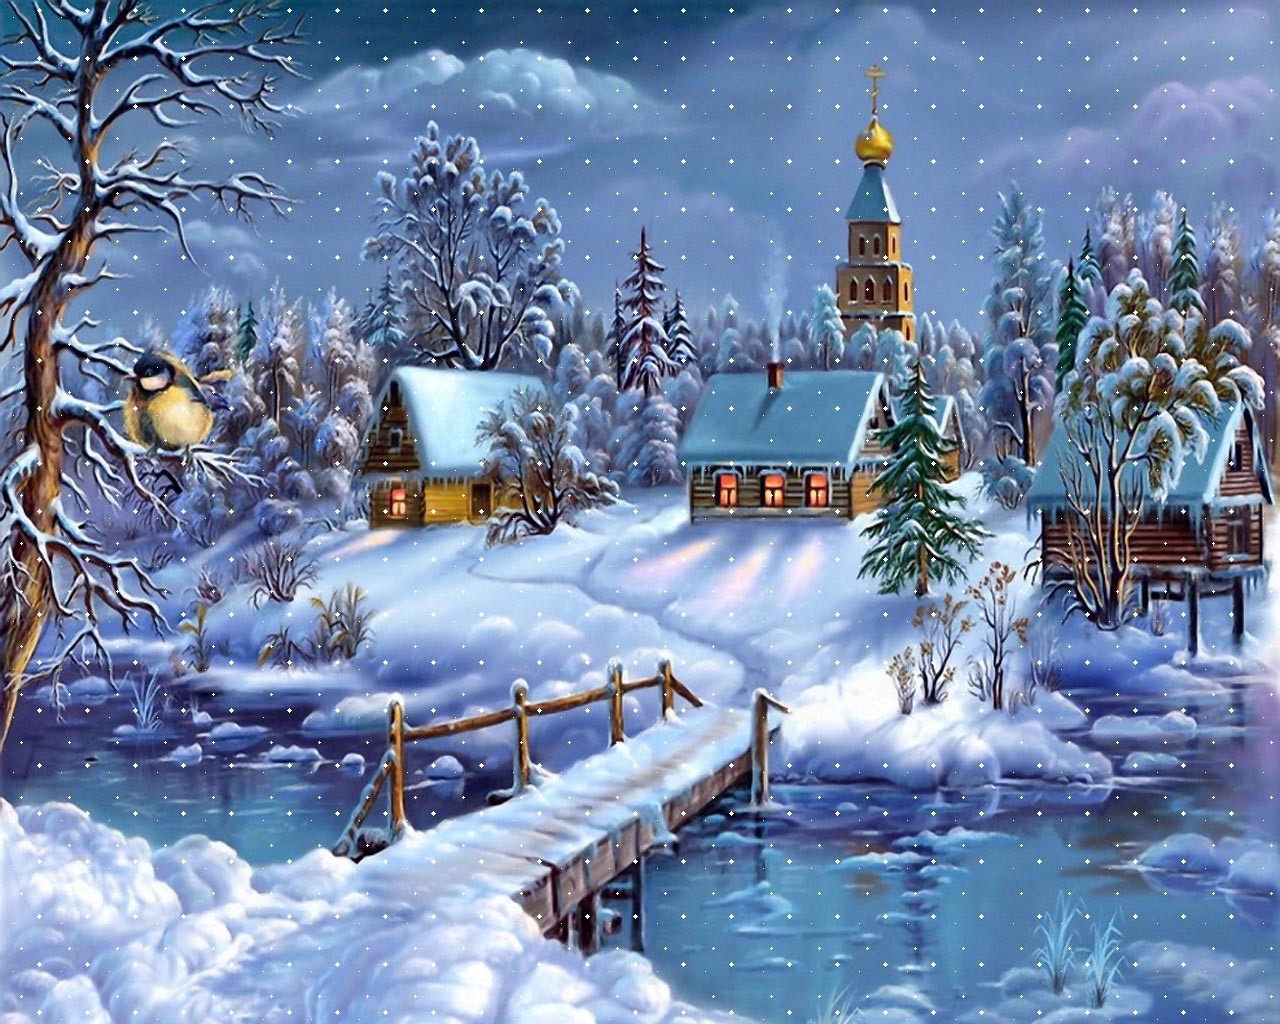 Snowy Christmas Night On Holiday Image HD Wallpaper